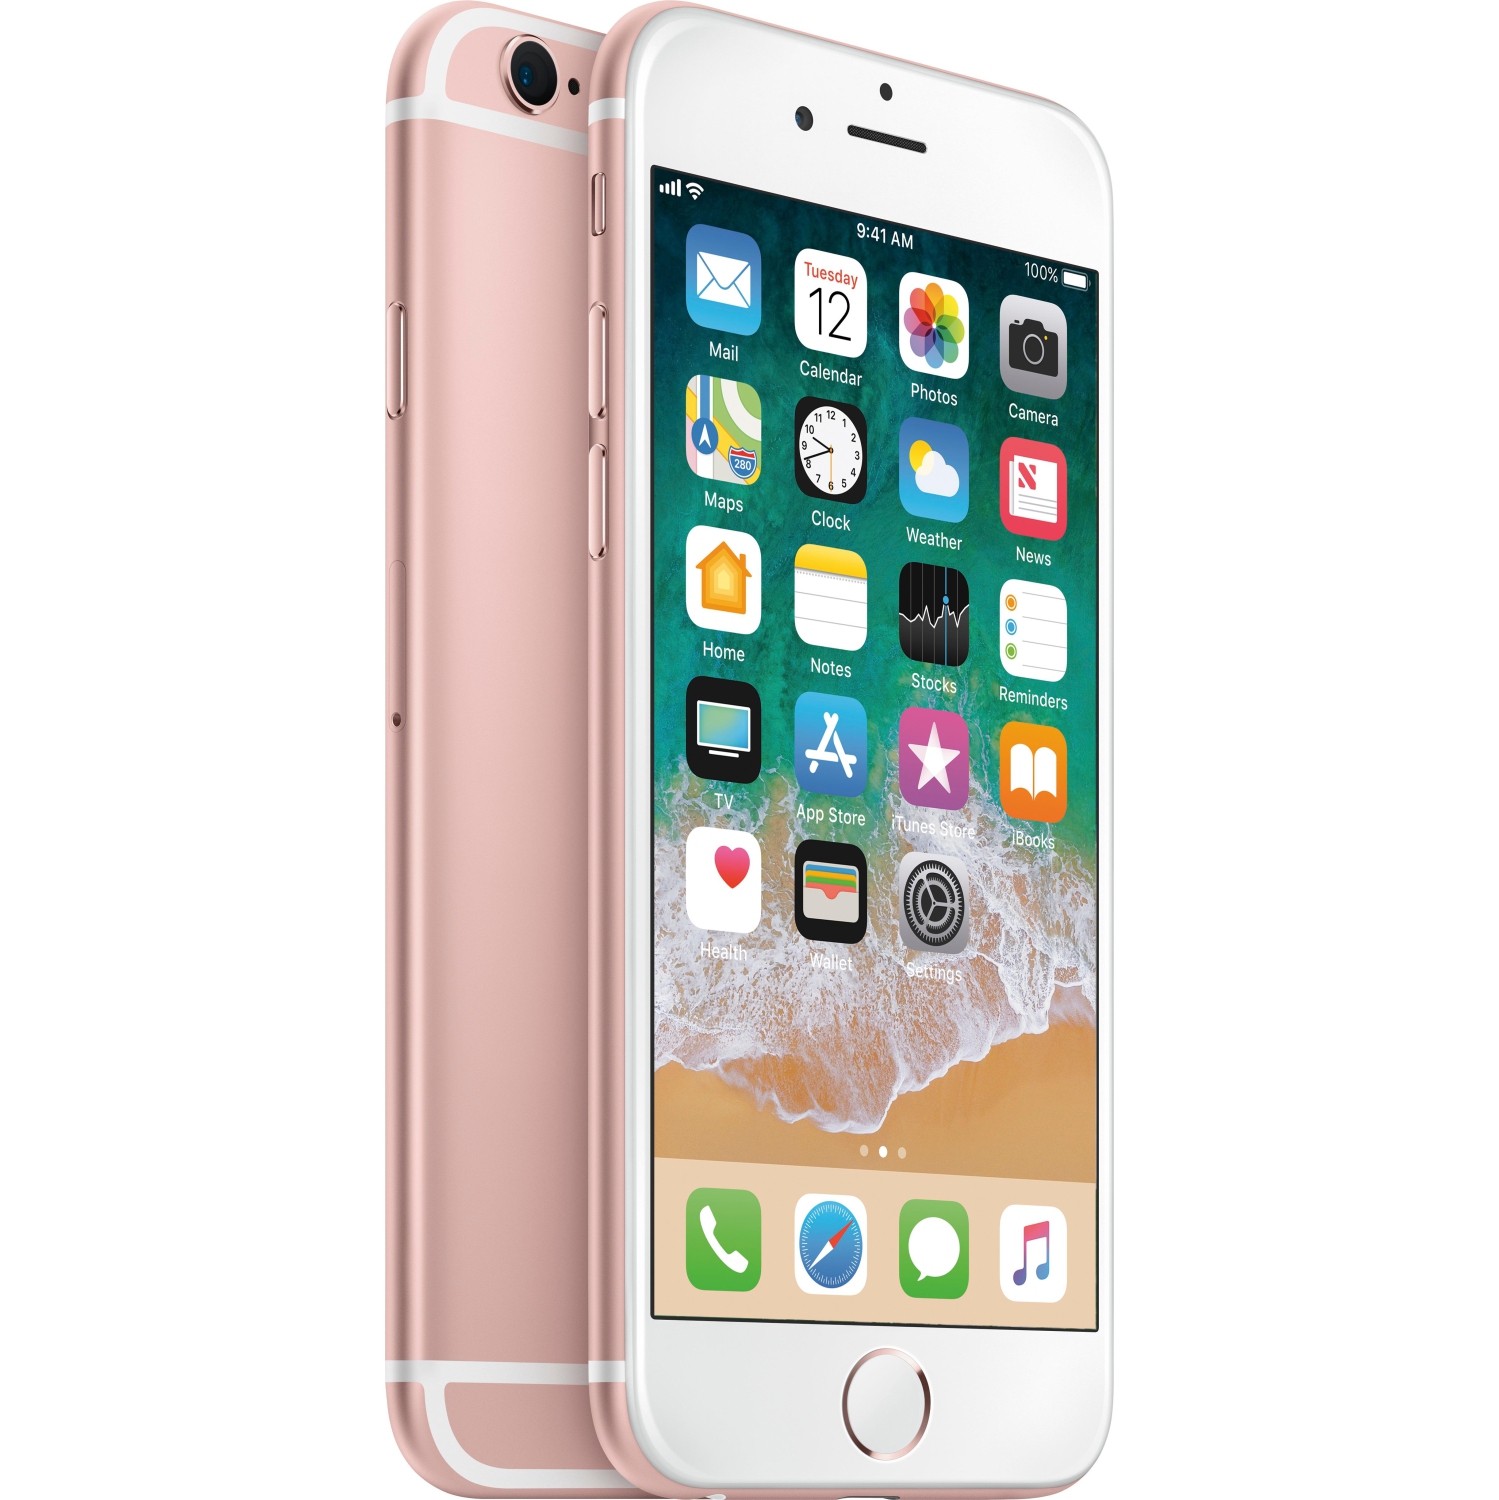 Refurbished (Good) - Apple iPhone 6s 32GB Smartphone - Rose Gold - Unlocked